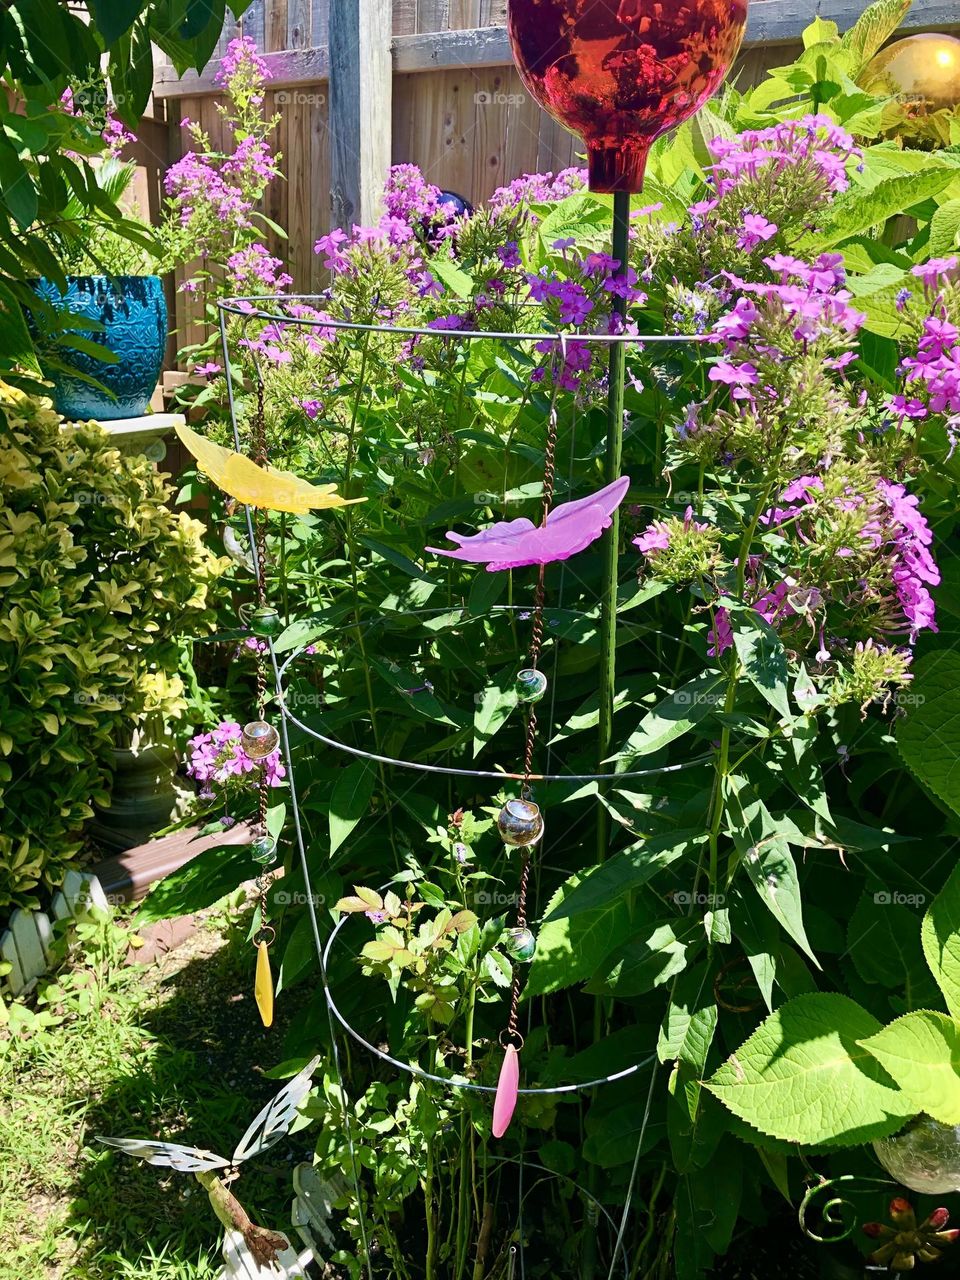 Butterfly garden chimes & blooming flower garden 